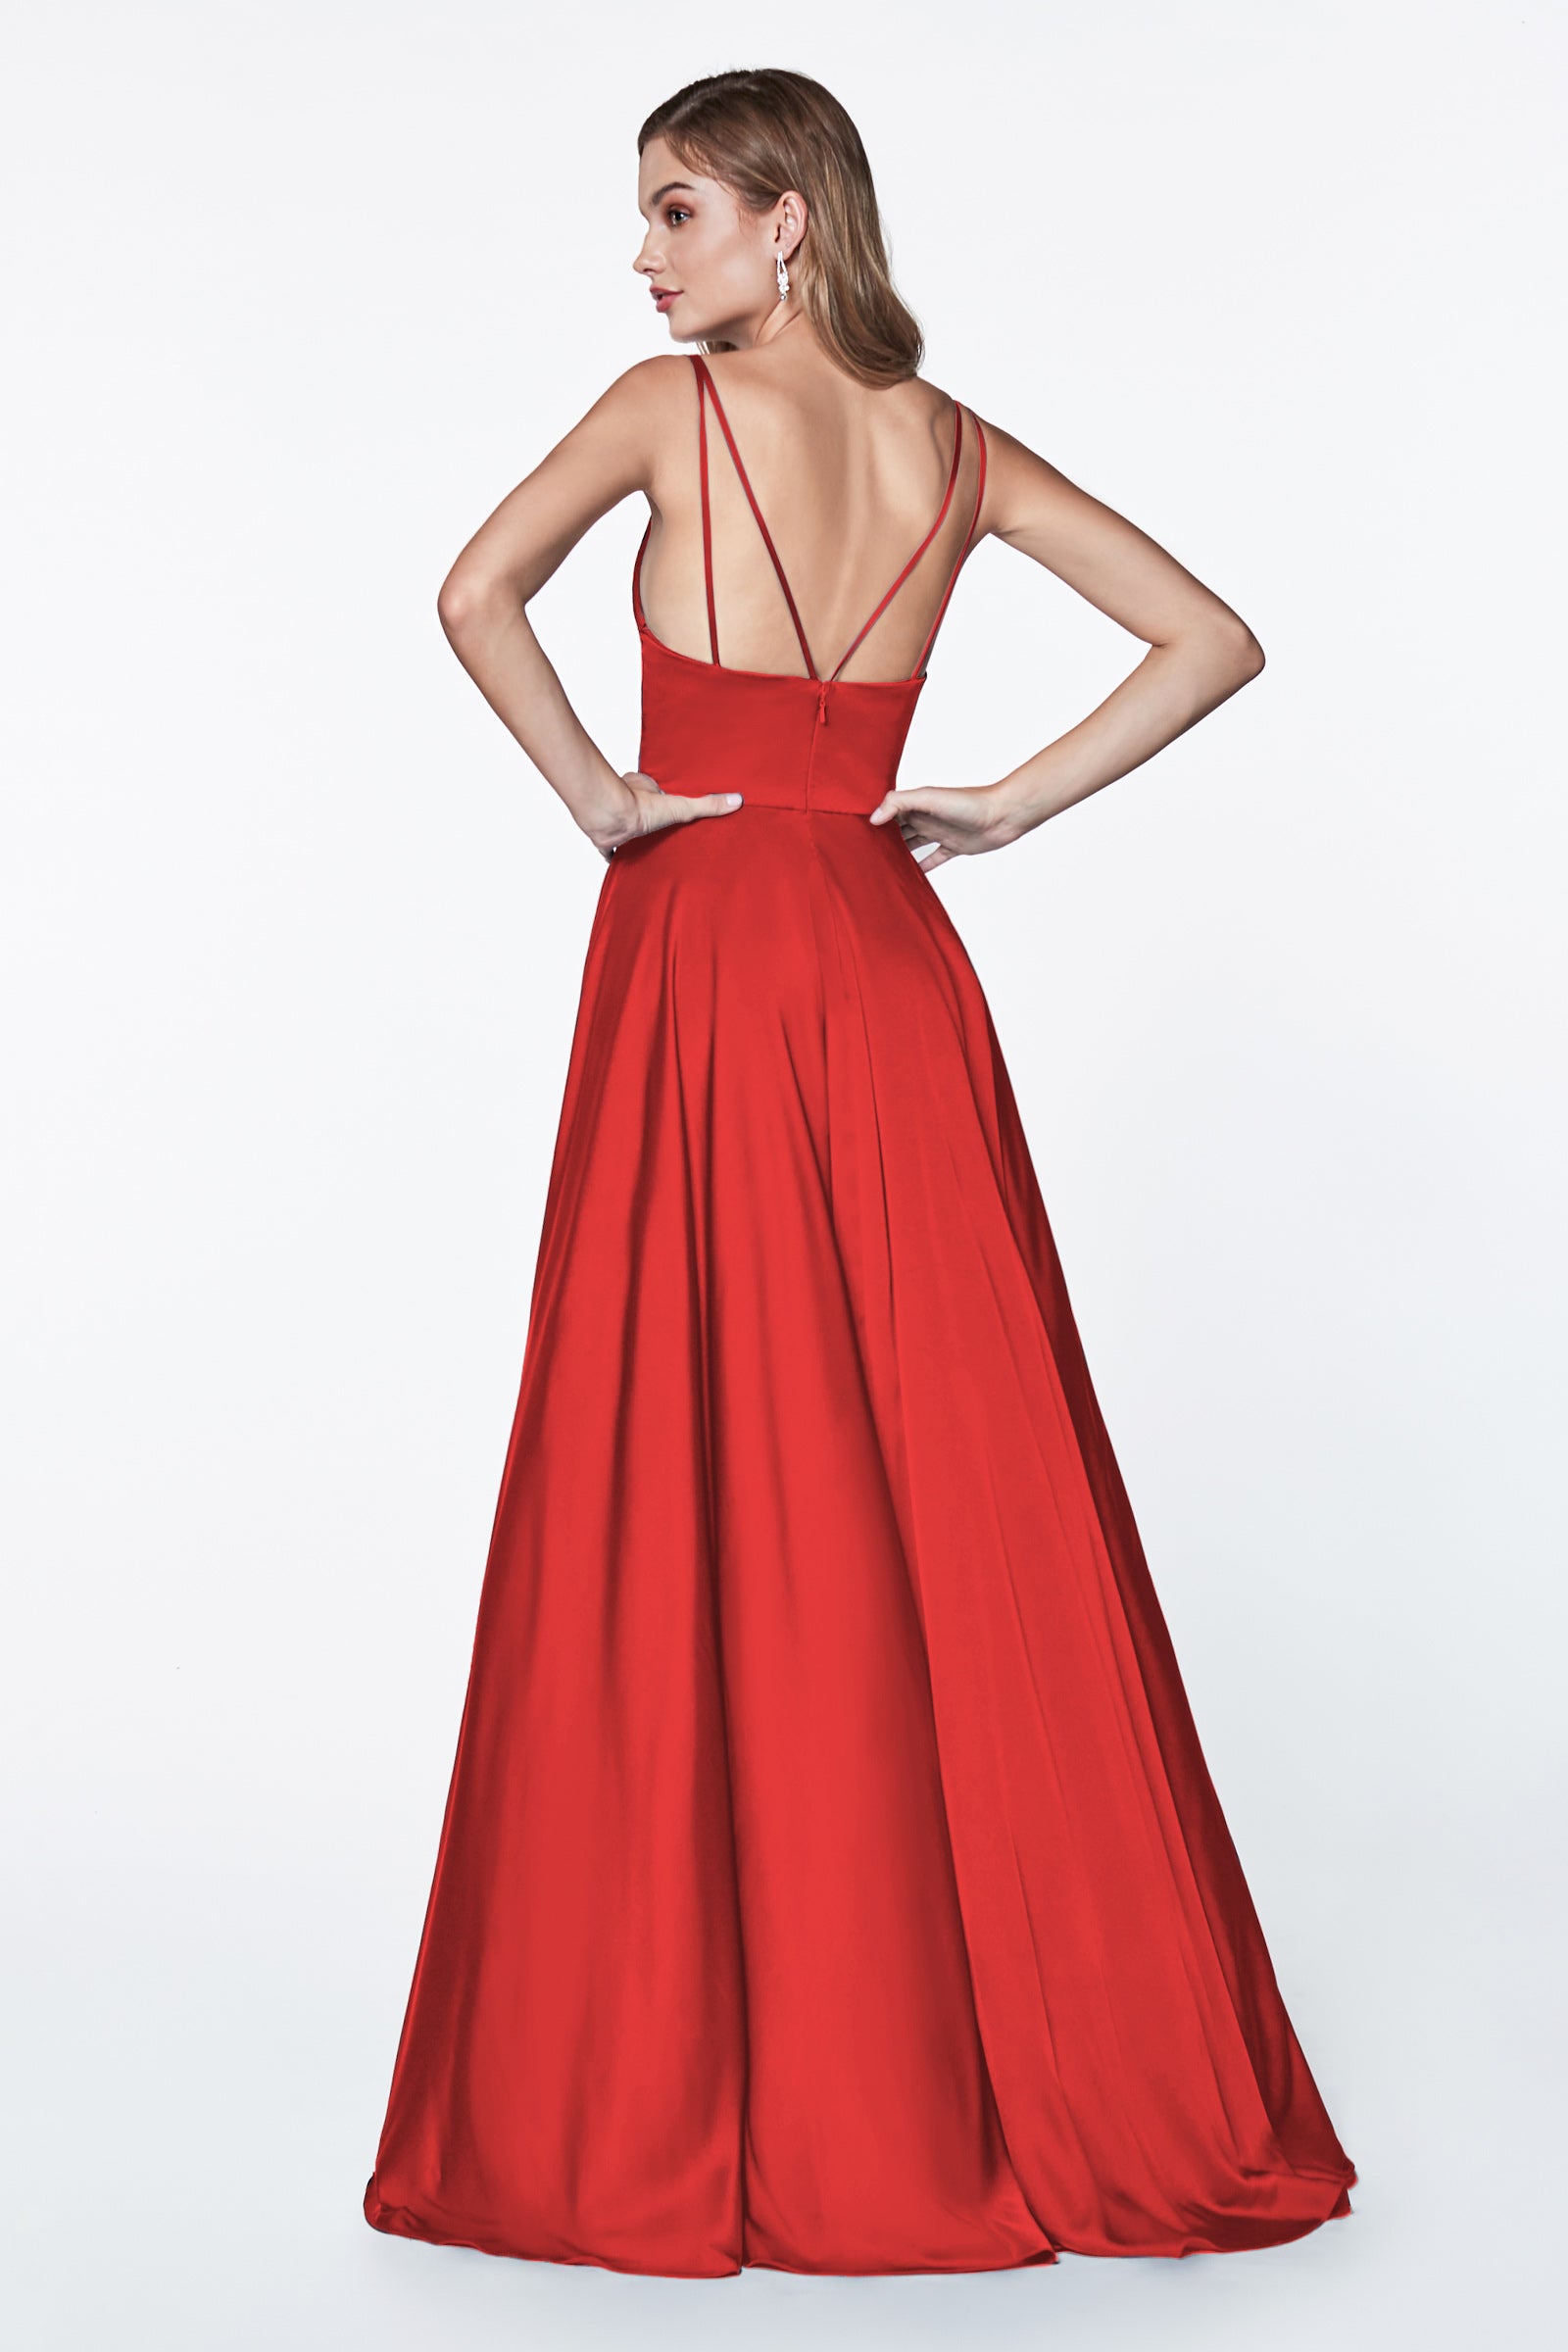 long red satin formal prom dress